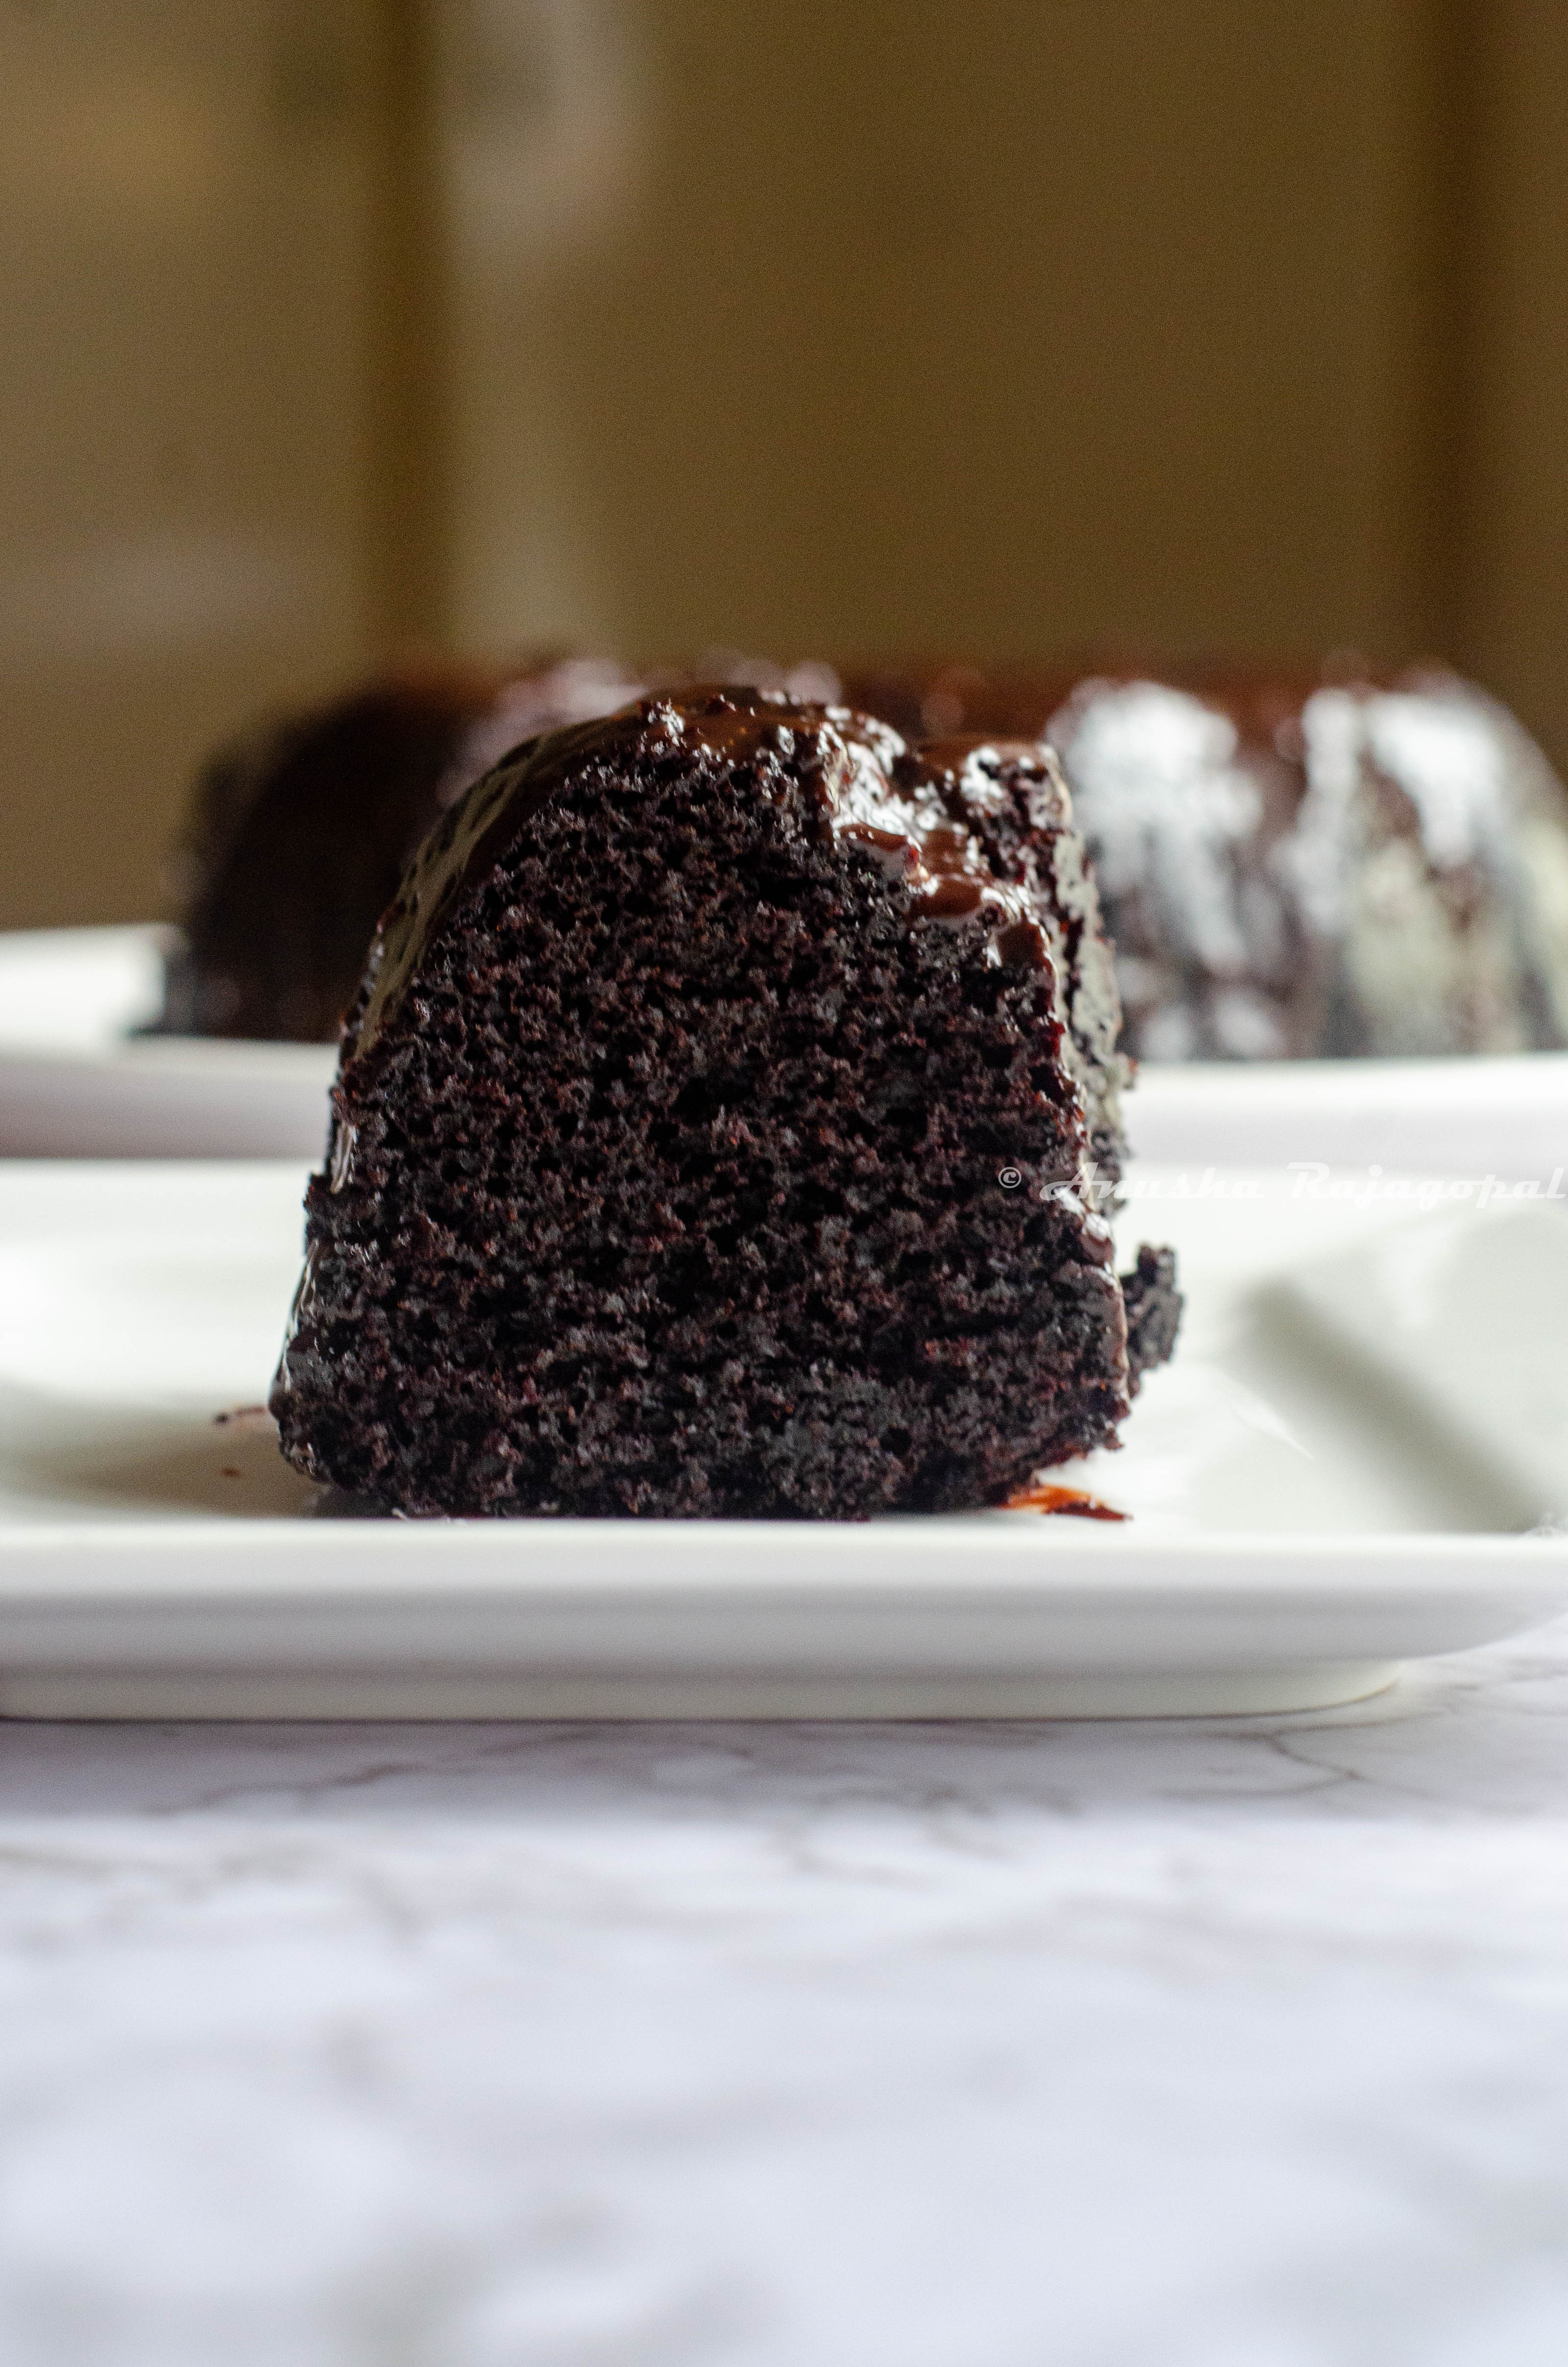 black magic cake glazed and sliced . served on a white plate